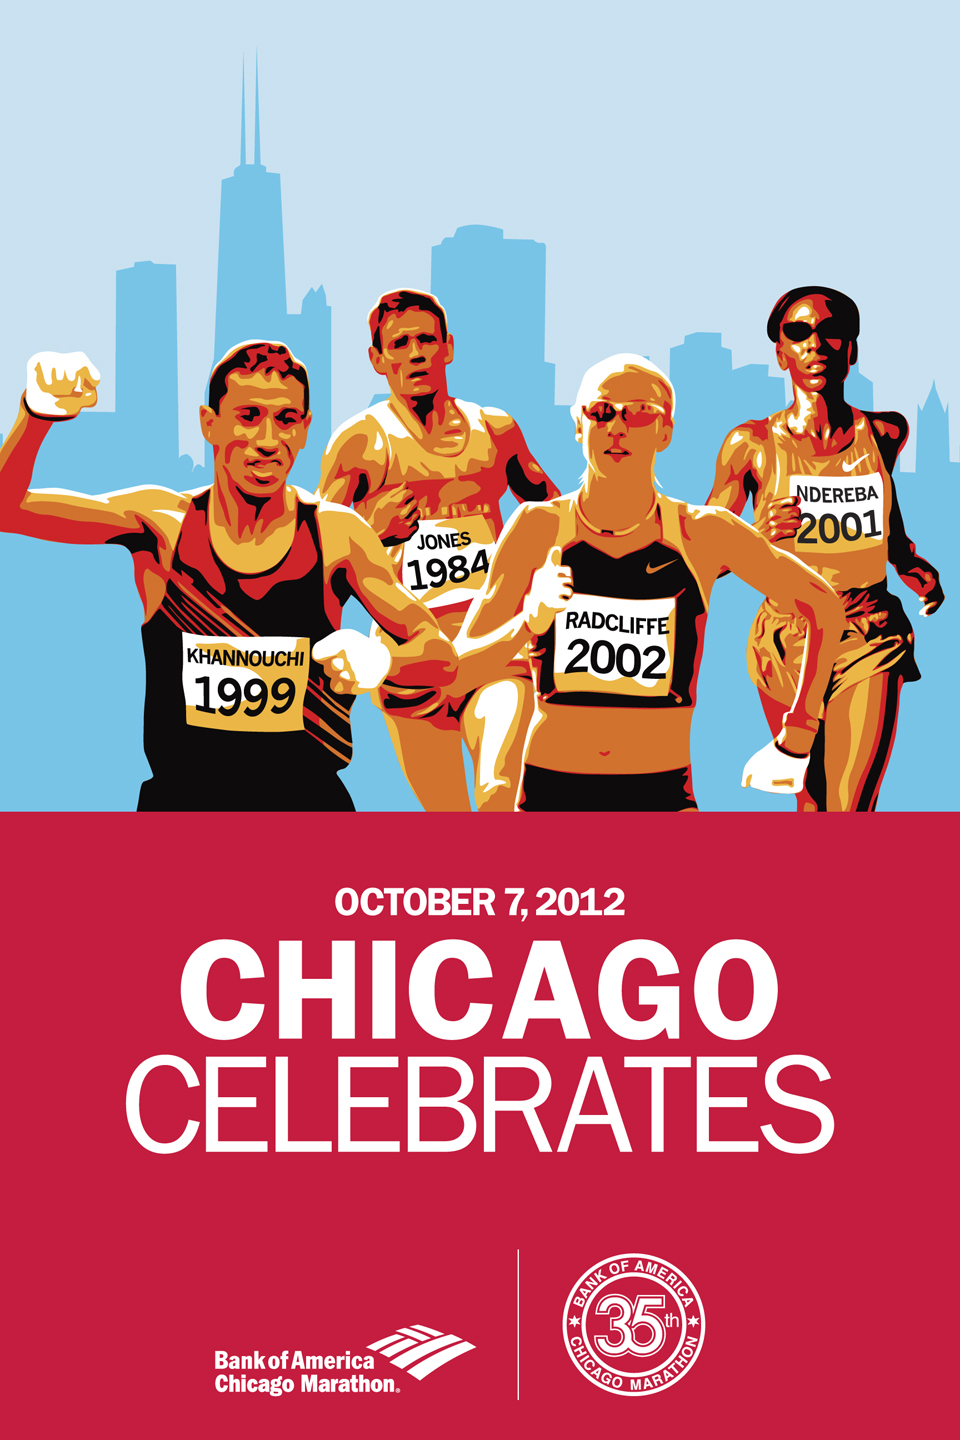 Bank of America Chicago Marathon Daniel Hertzberg